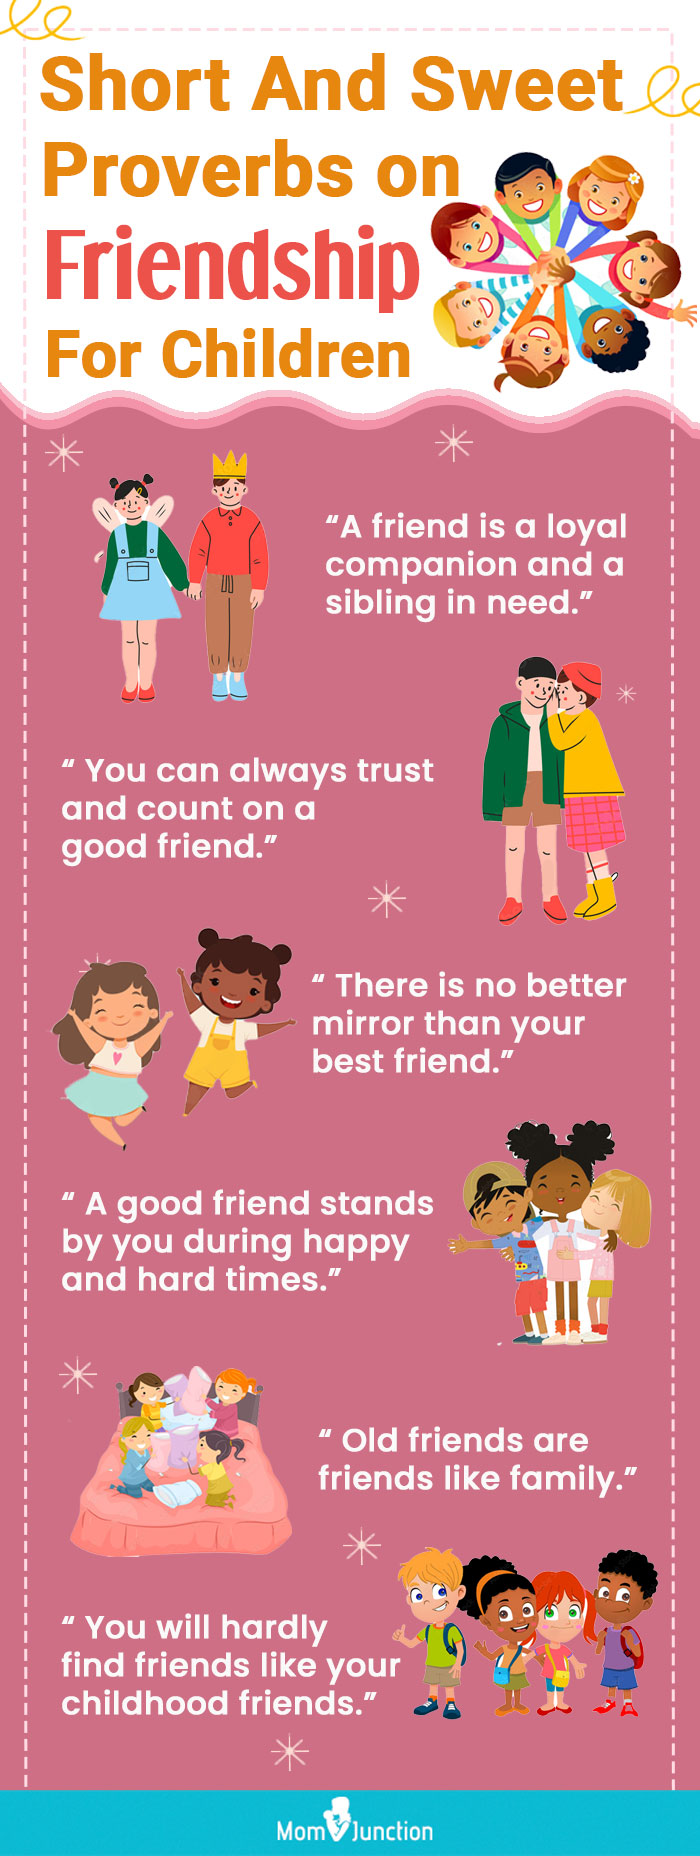 https://www.momjunction.com/wp-content/uploads/2022/11/Short-And-Sweet-Proverbs-On-Friendship-For-Children.jpg